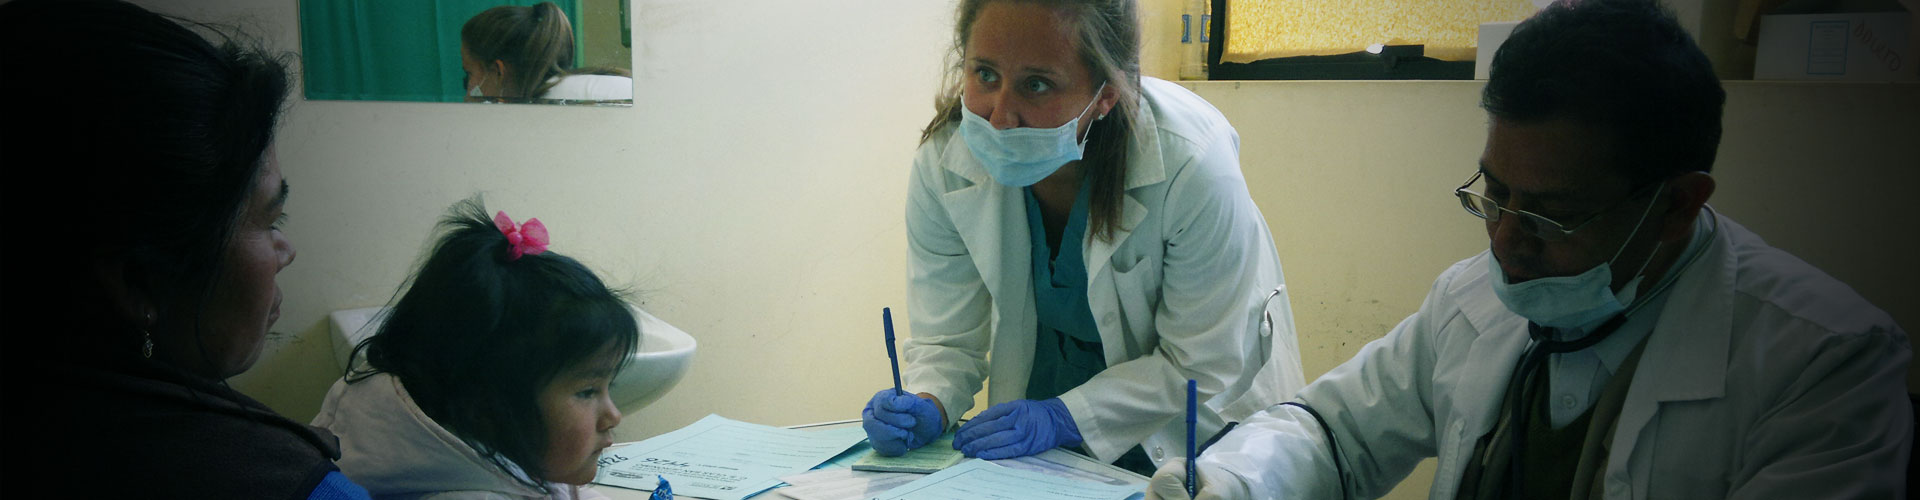 Medical Volunteer Program in Peru - Cusco